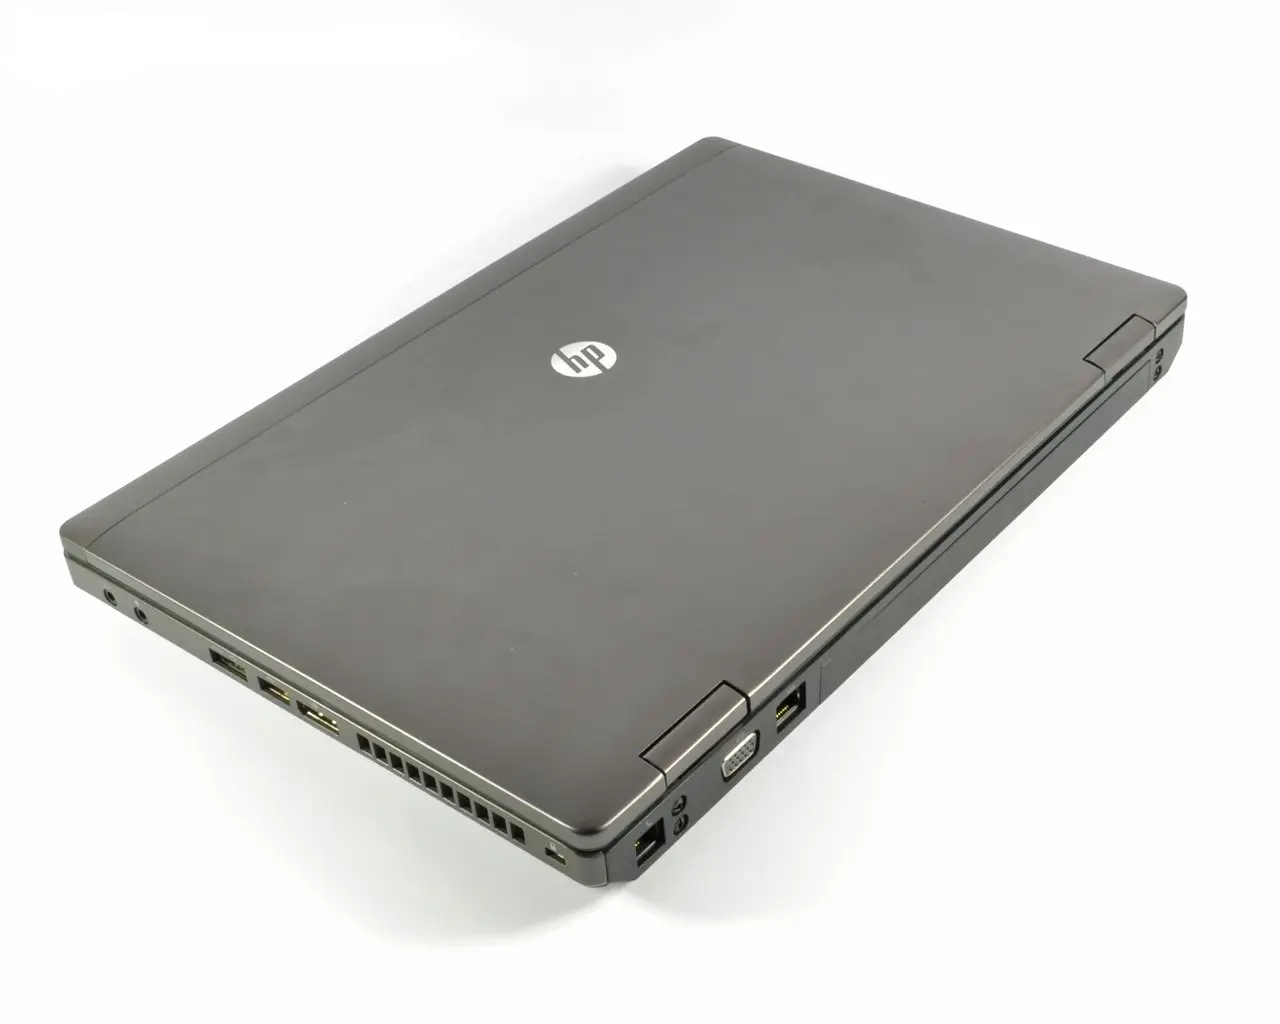 hewlett-packard hp probook 6470b driver - Does HP ProBook 6470b have SIM card slot